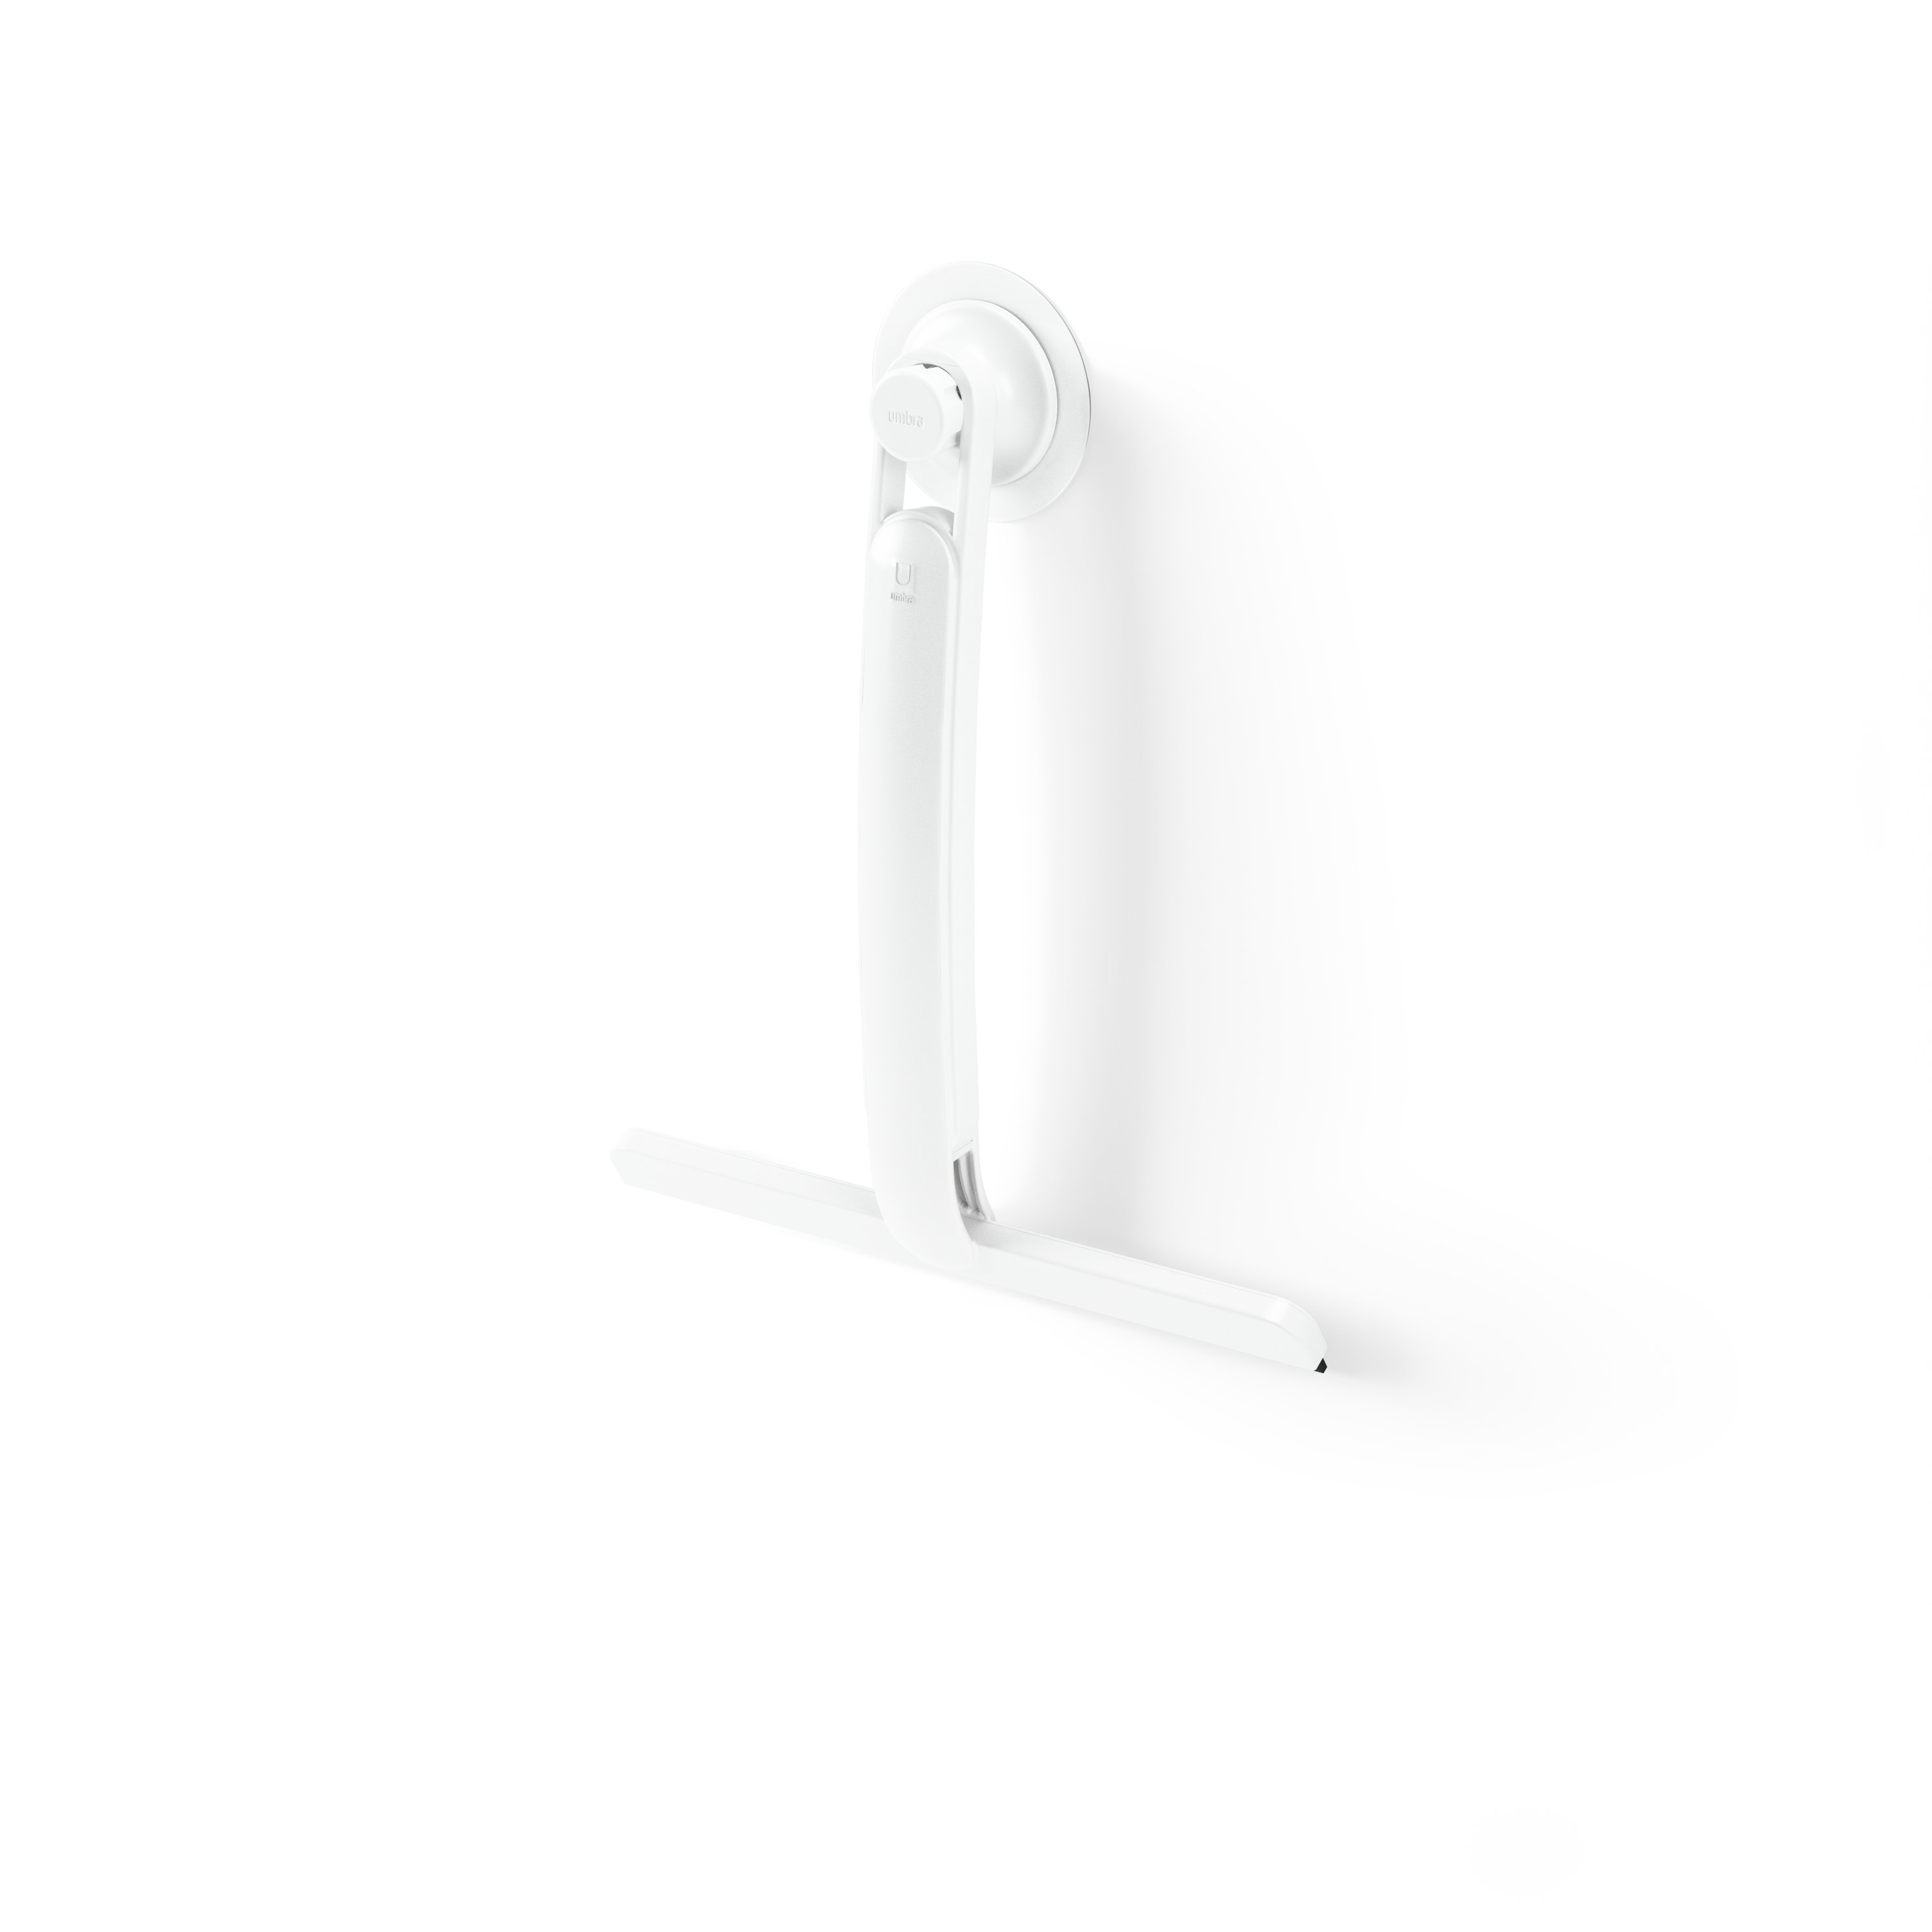 Umbra Flex Adhesive Corner Bin - White